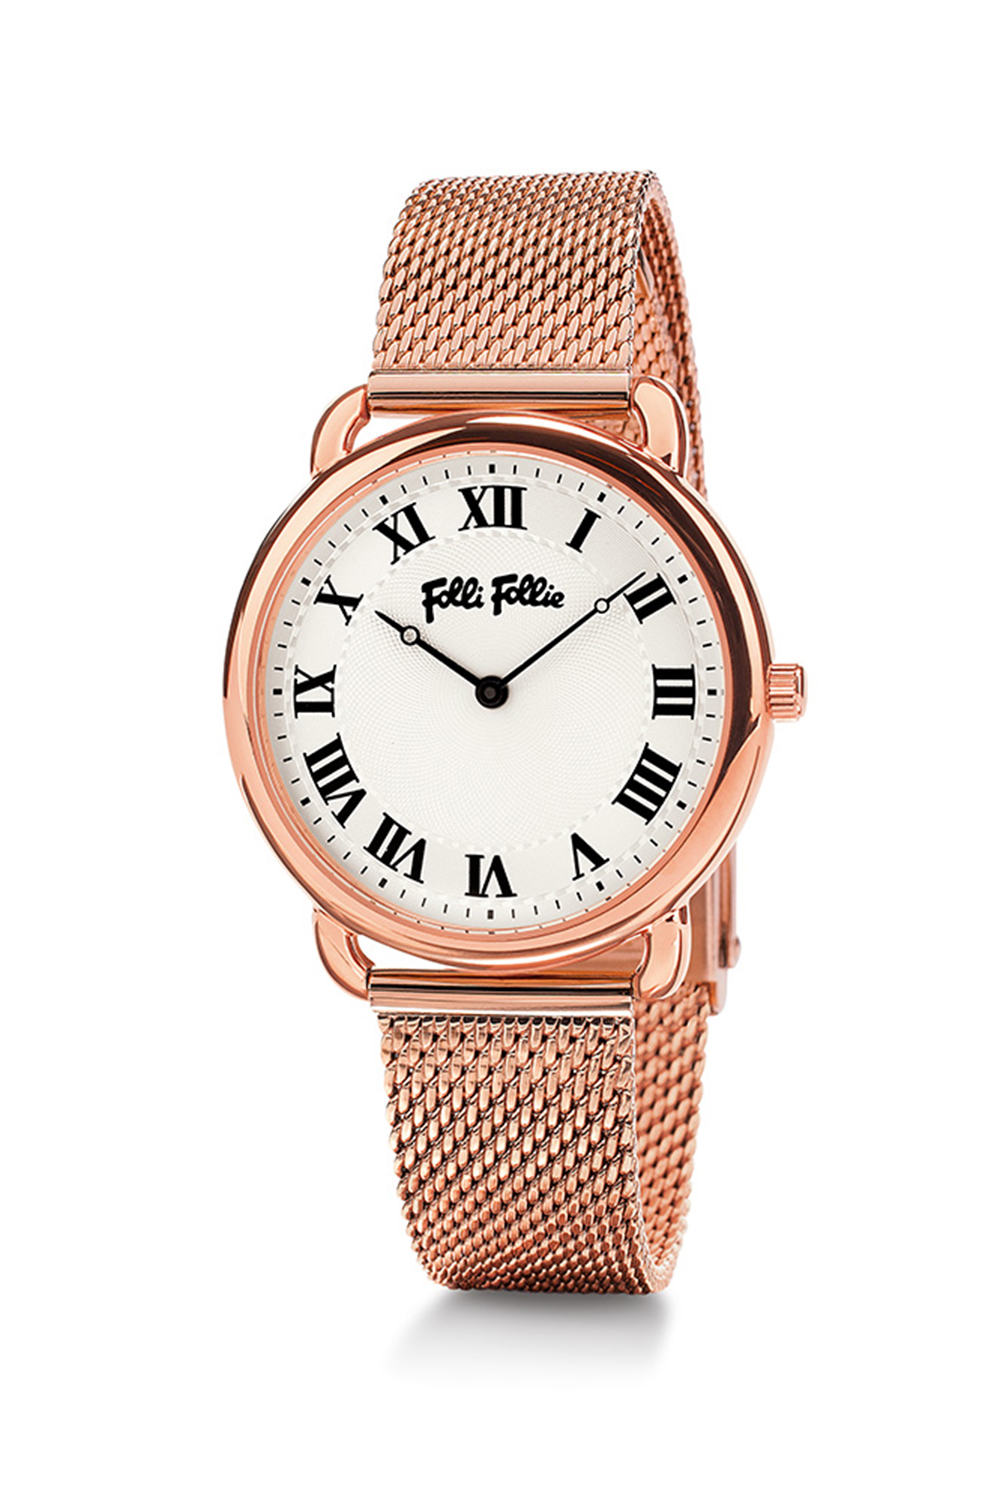 FOLLI FOLLIE – Γυναικείο ρολόι από ατσάλι FOLLI FOLLIE PERFECT MATCH ροζ χρυσό WF16R013BPS-XX